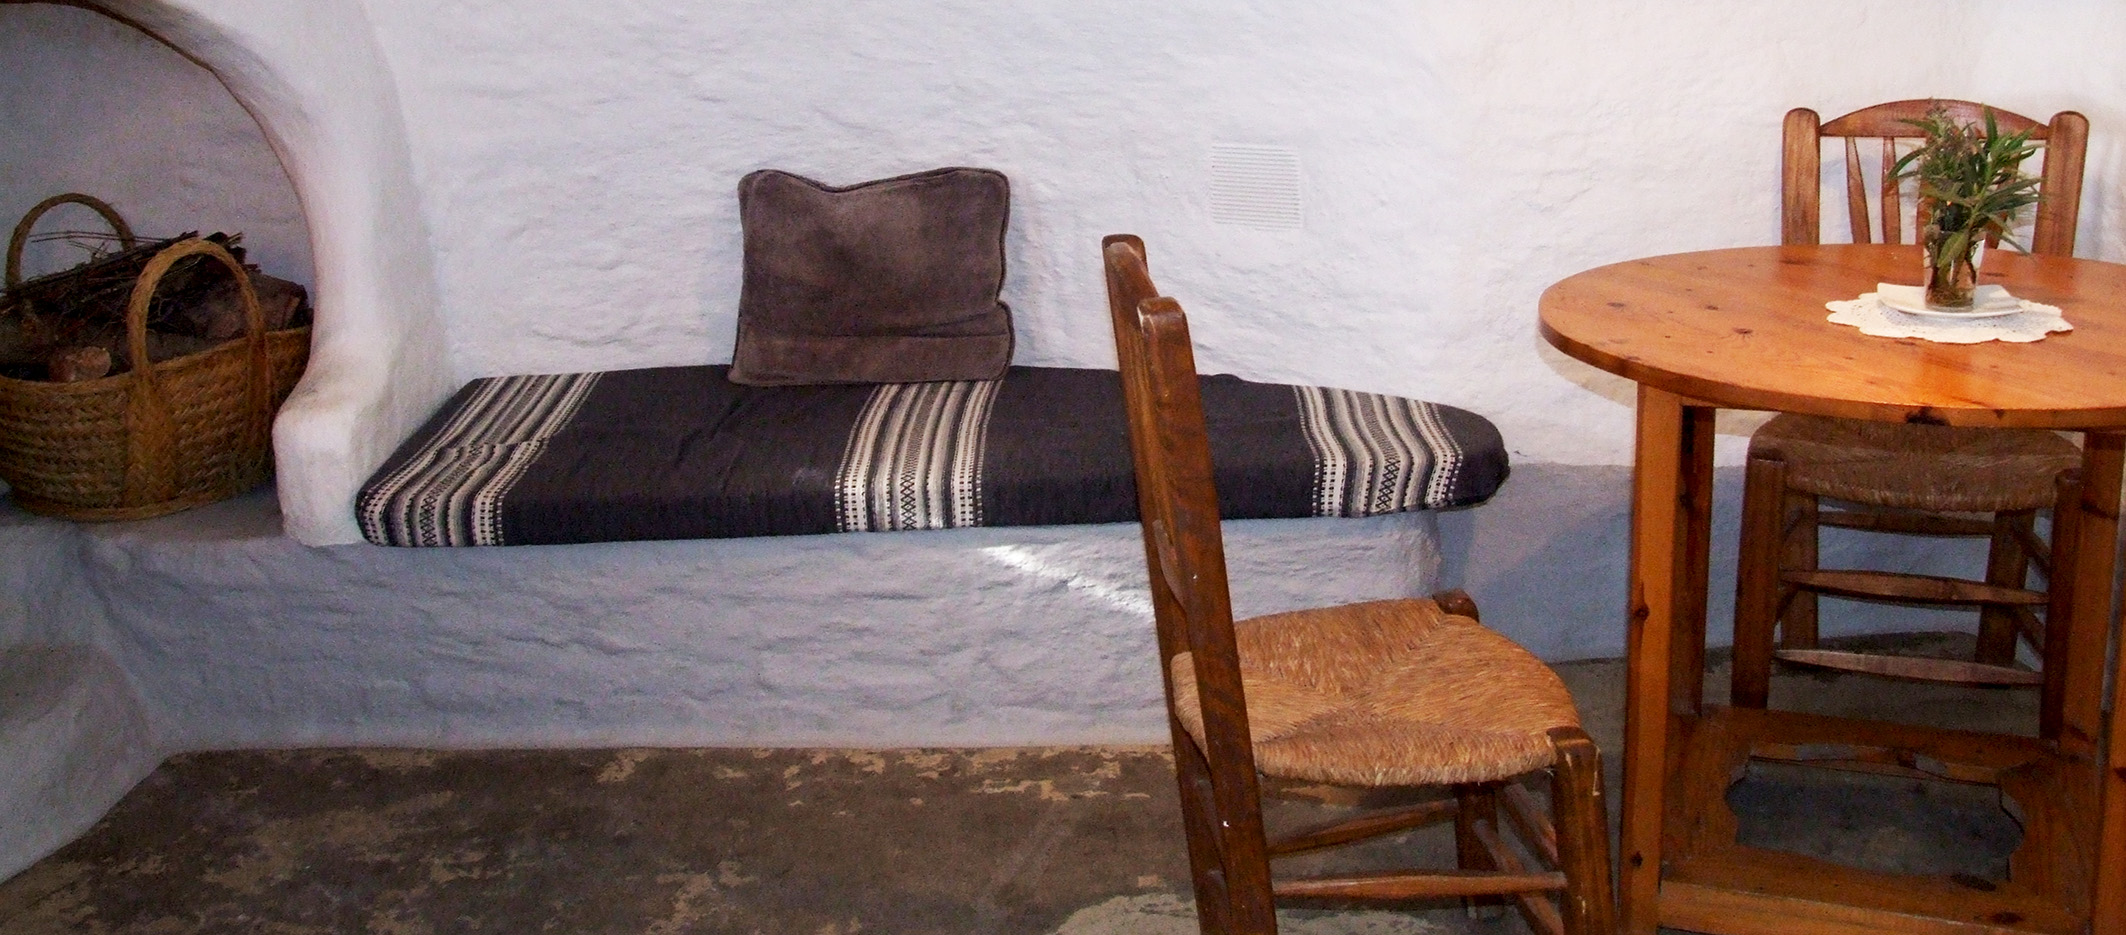 sofa cueva 1 angulo